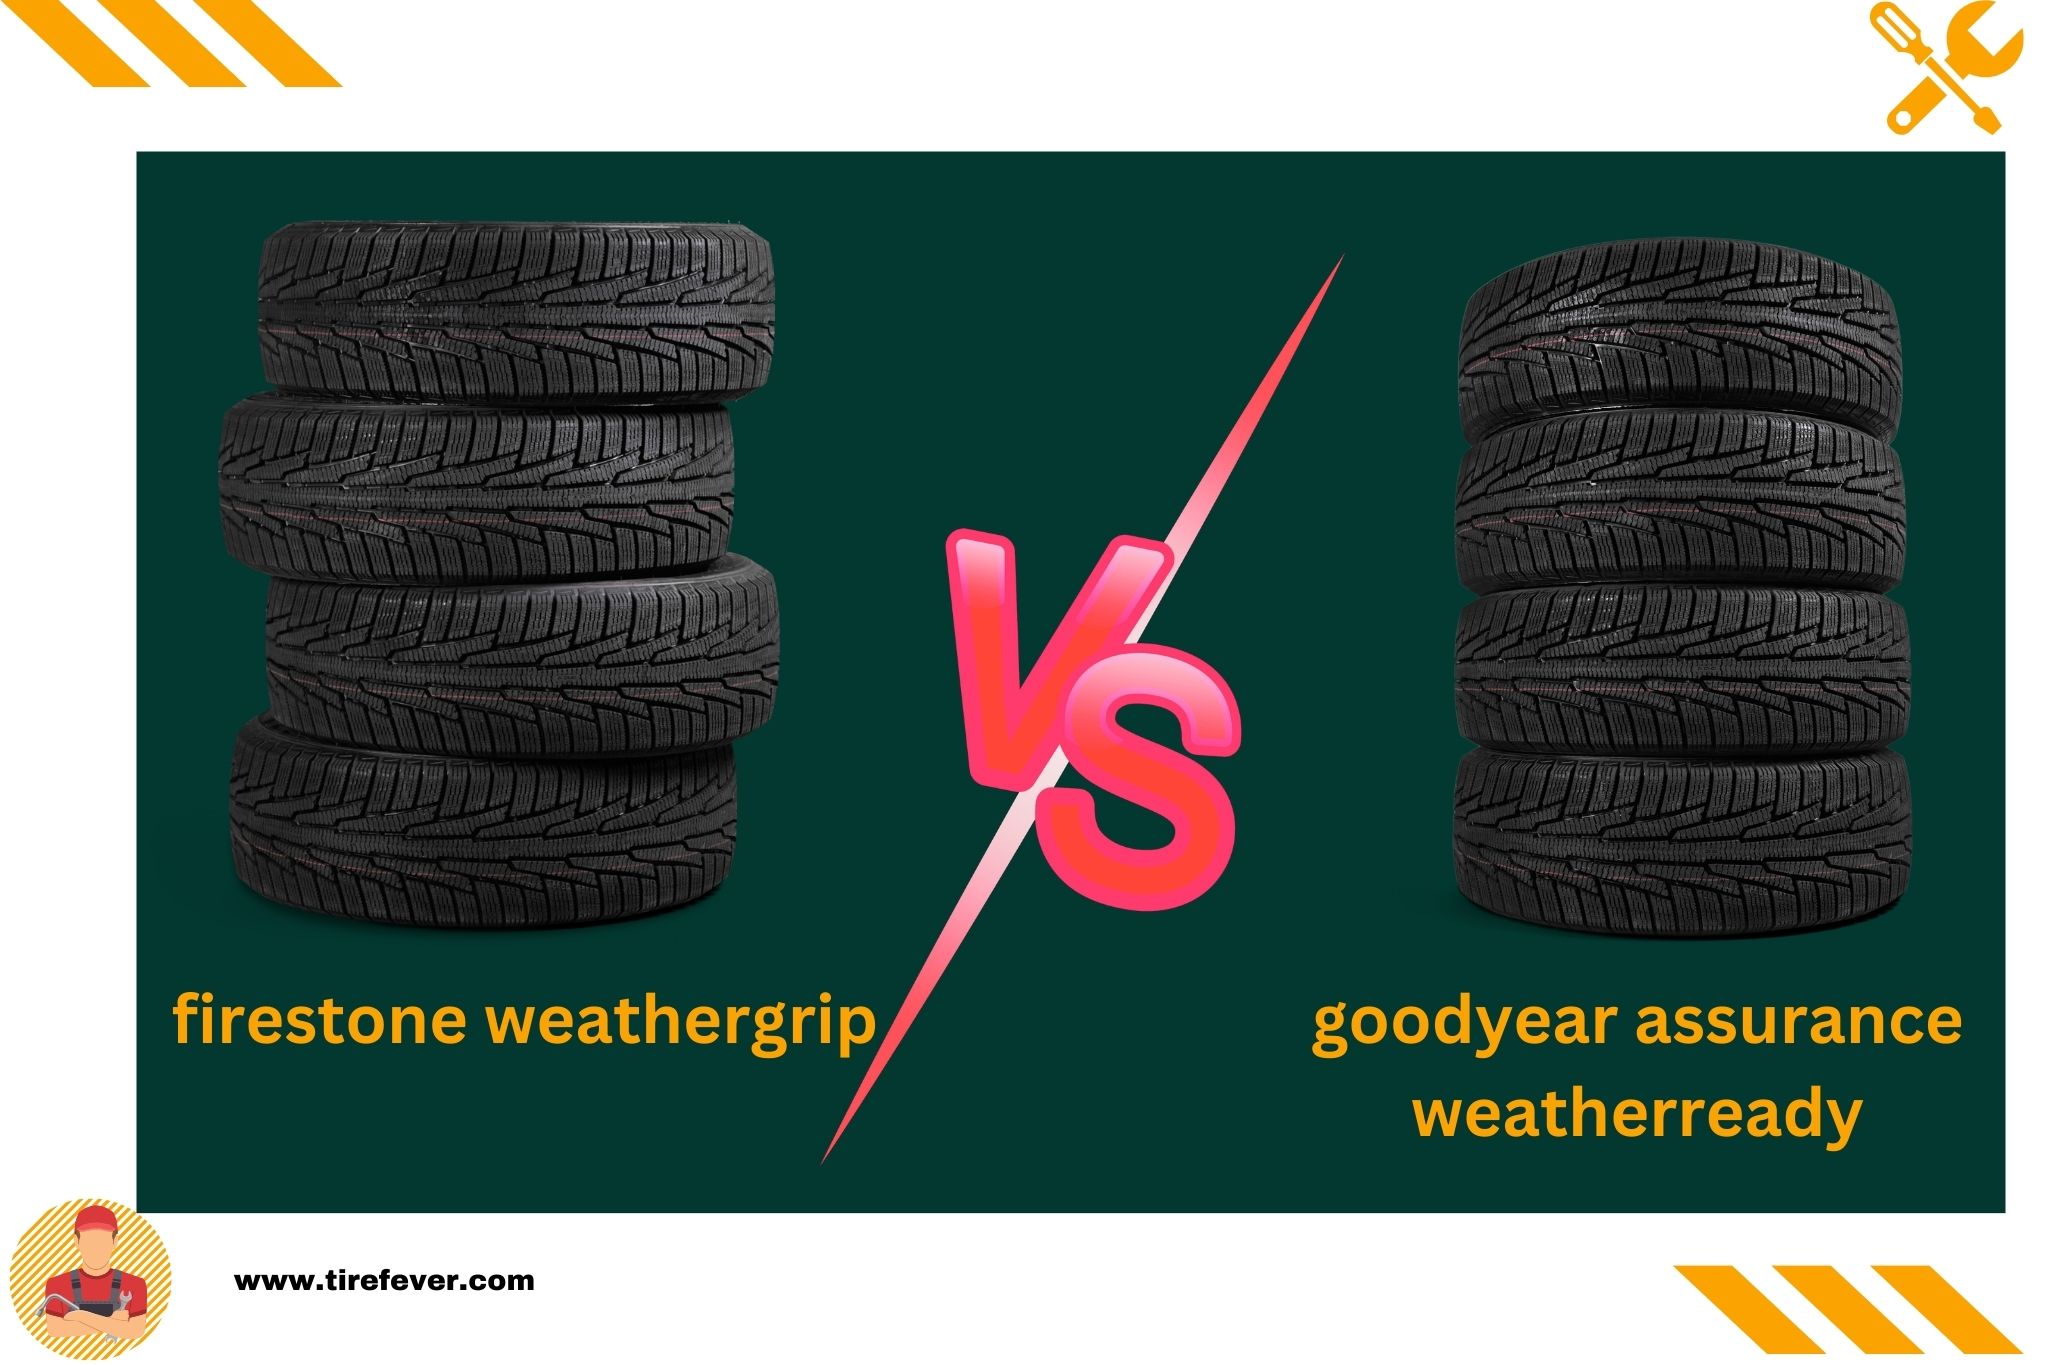 firestone weathergrip vs goodyear assurance weatherready